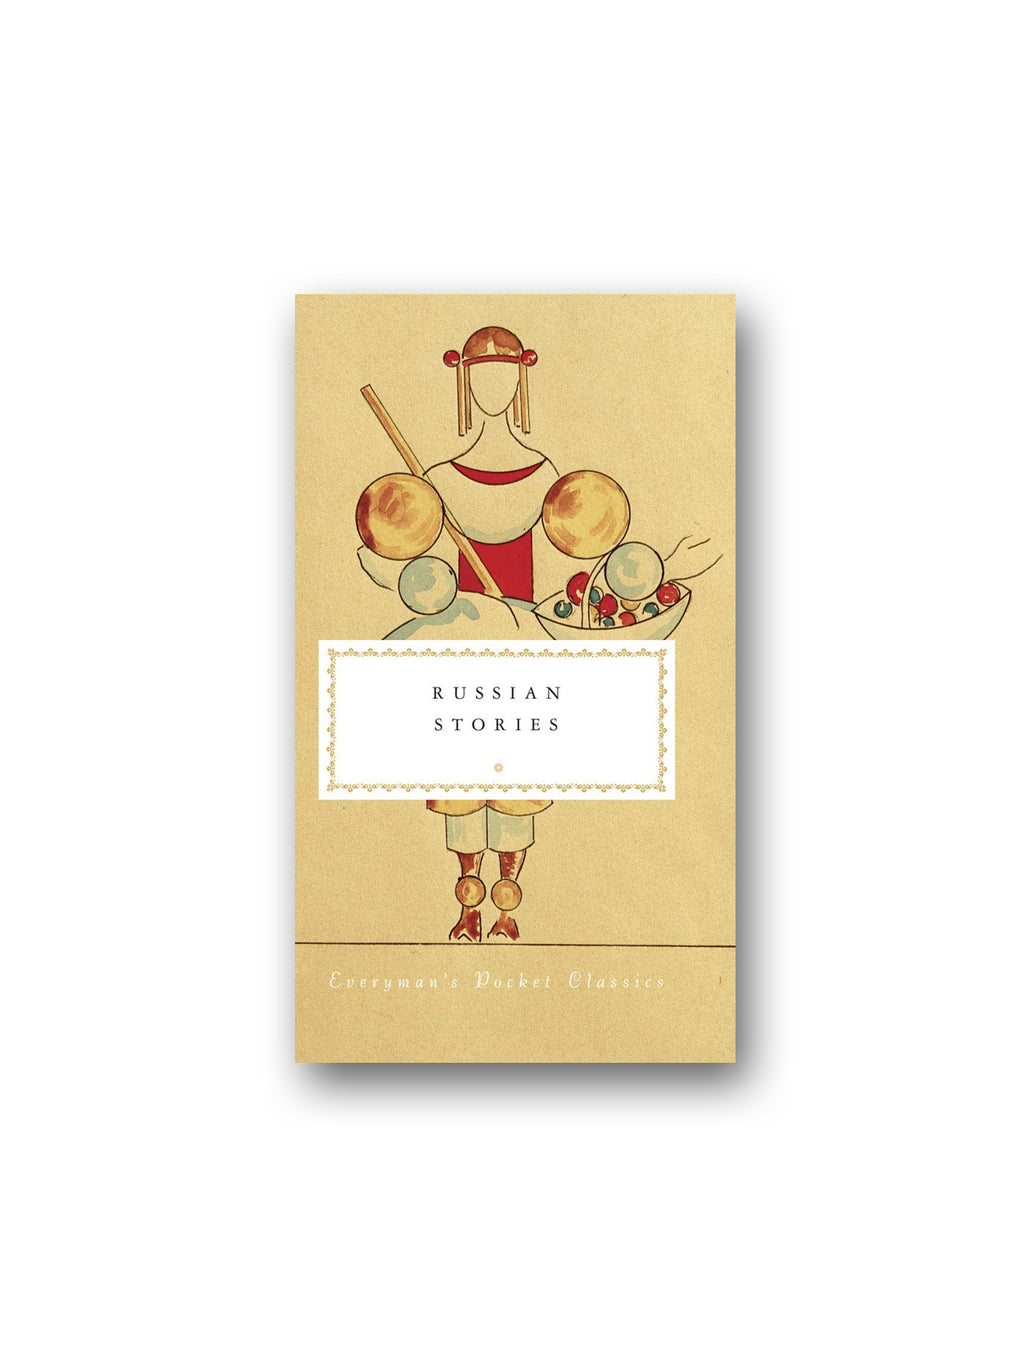 Russian Stories - Everyman's Library Pocket Classics